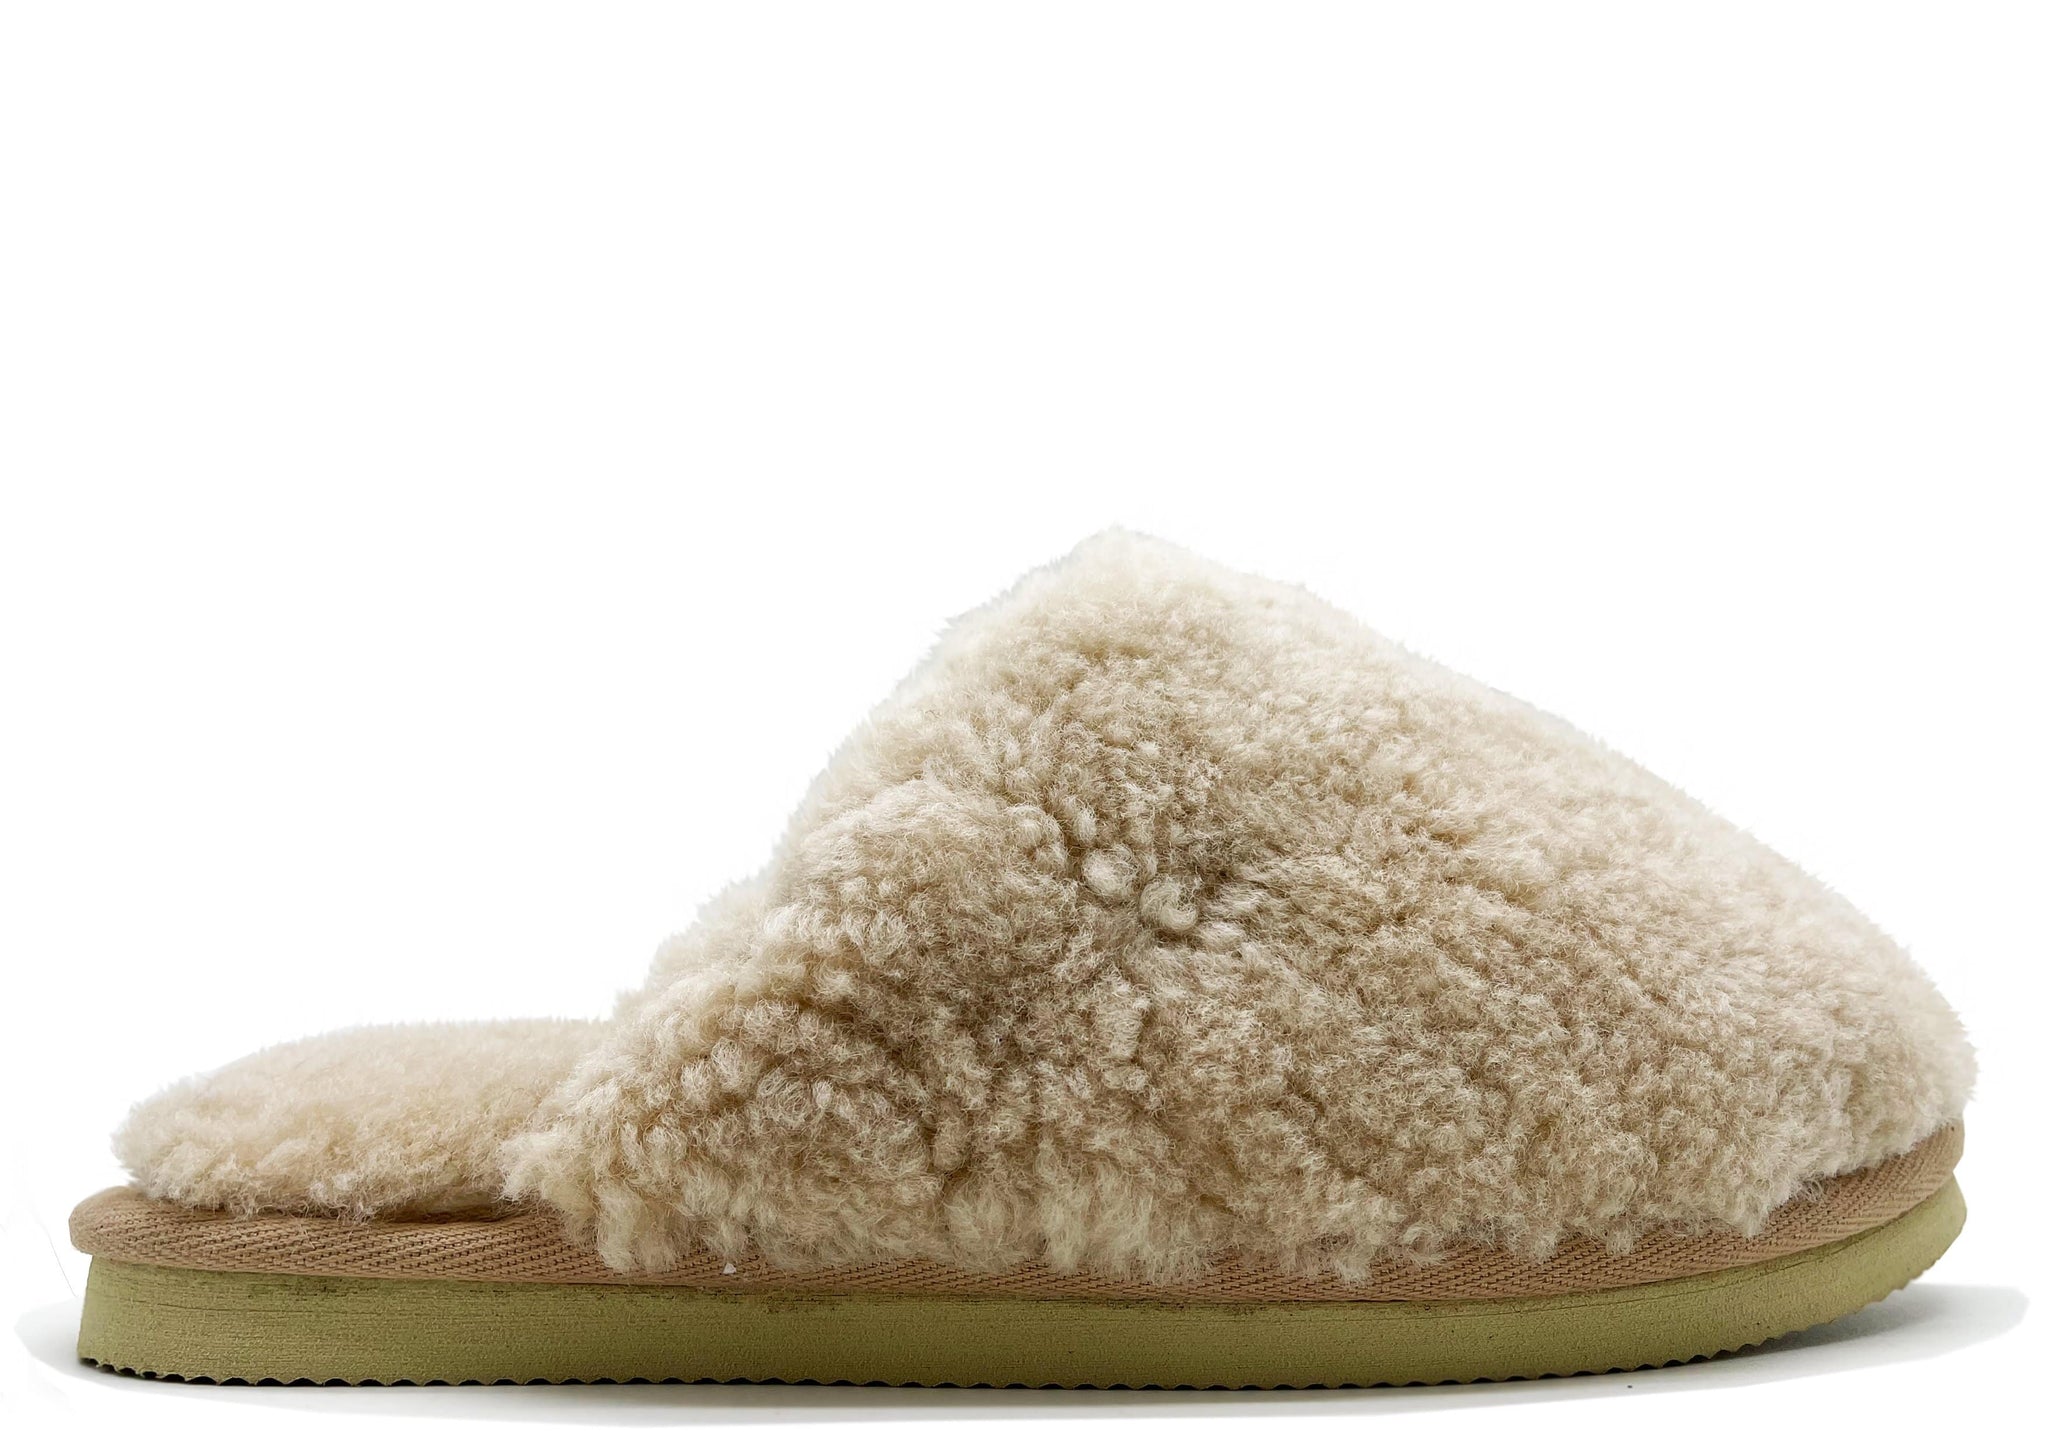 NAT 2 calçat thies 1856 ® Fluffy Shearling beige (W) moda ètica sostenible